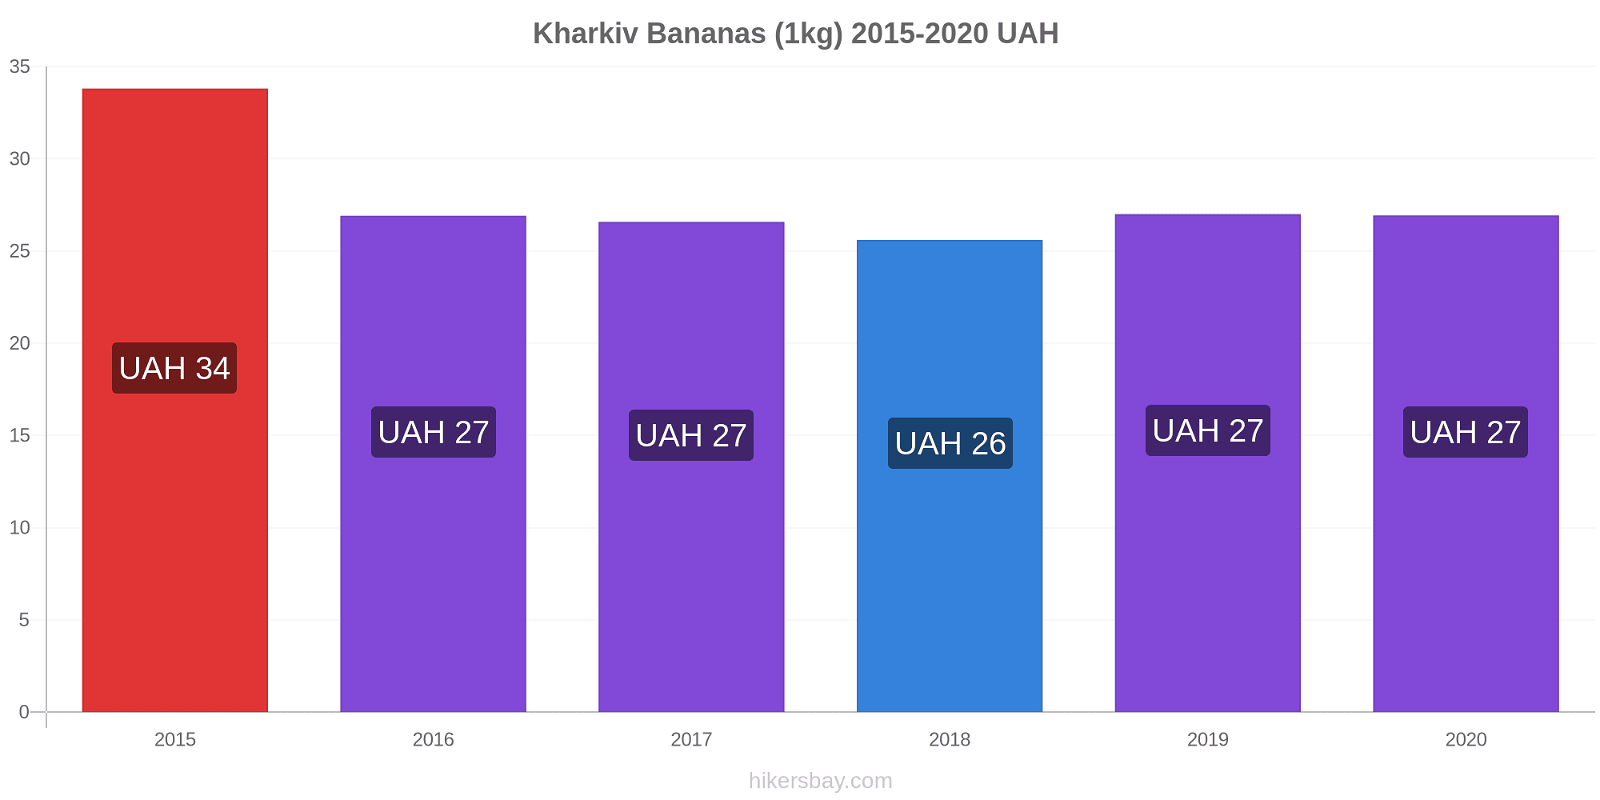 Kharkiv price changes Bananas (1kg) hikersbay.com